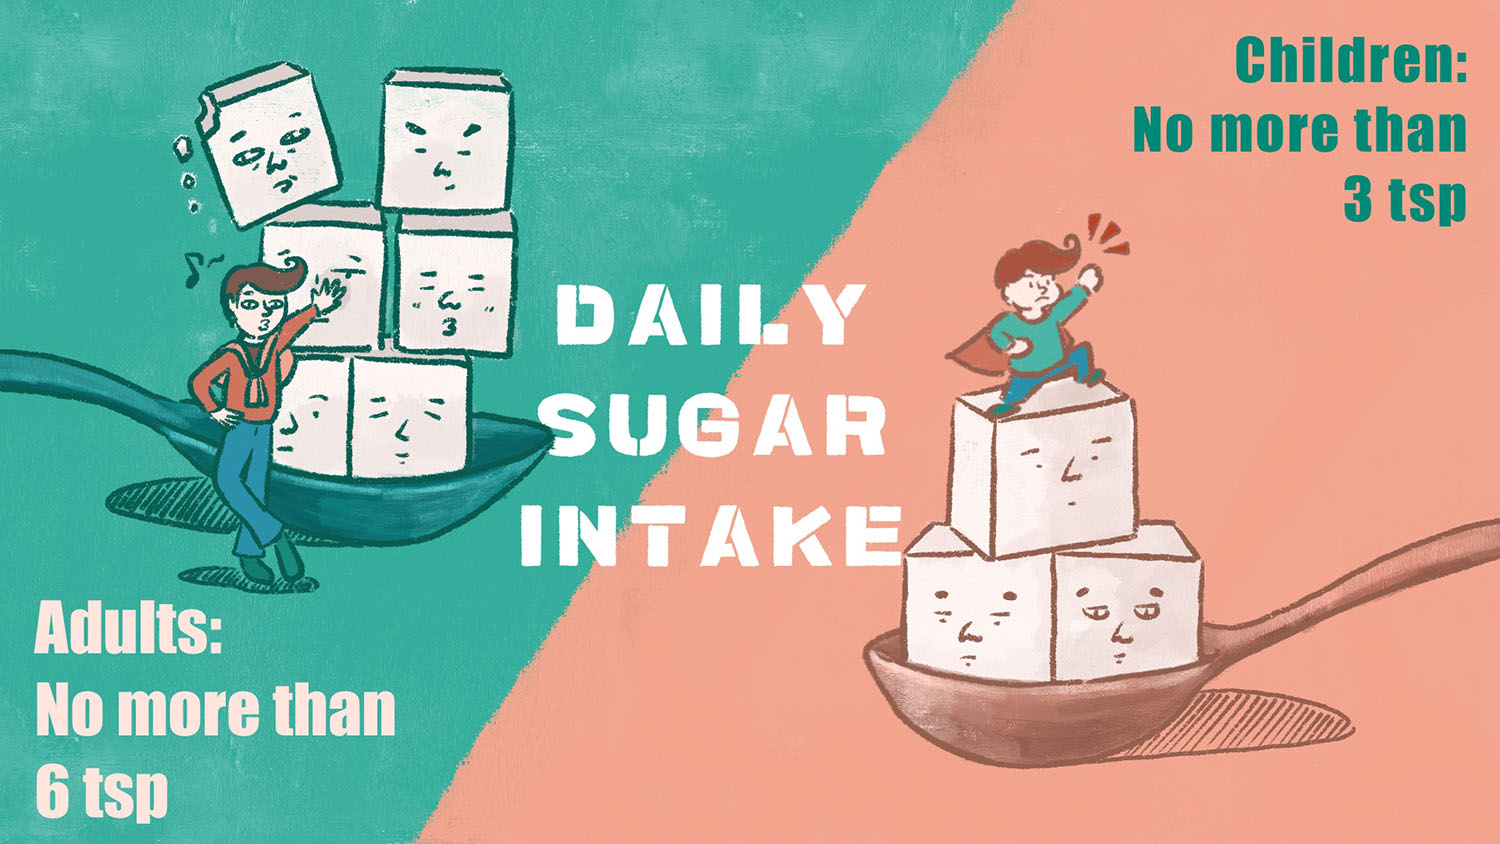 Aware of Daily Sugar Intake